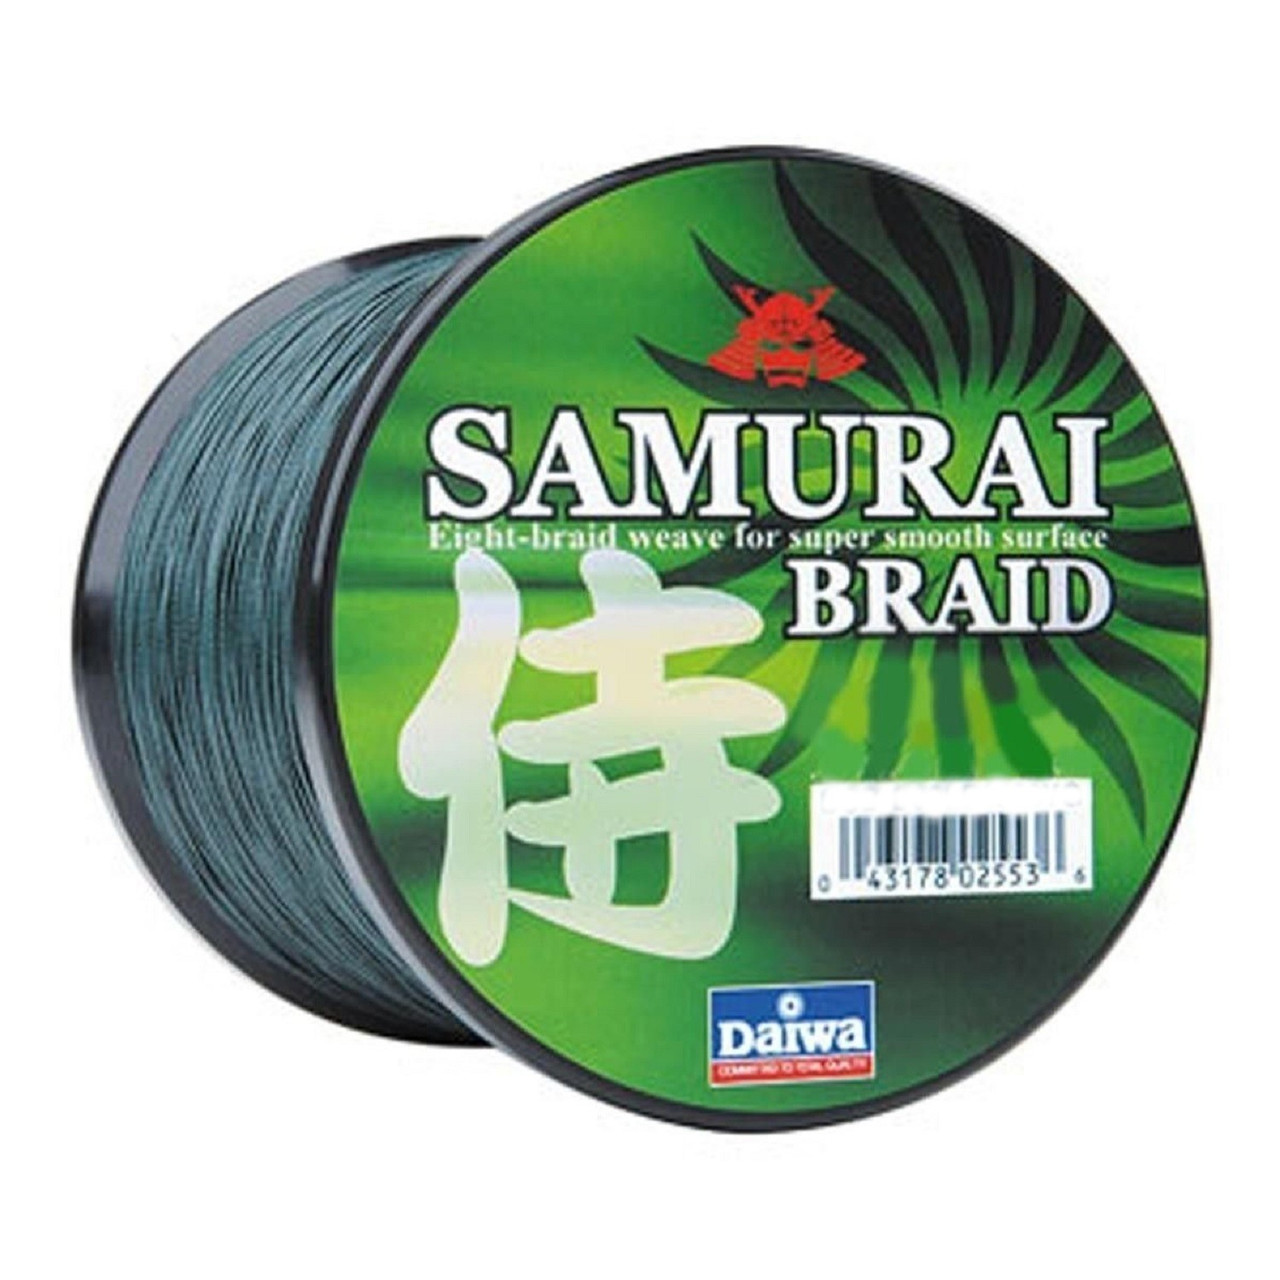 Daiwa Samurai Braided Line 55# Dark Green 1500 Yards DSB-B55LBG